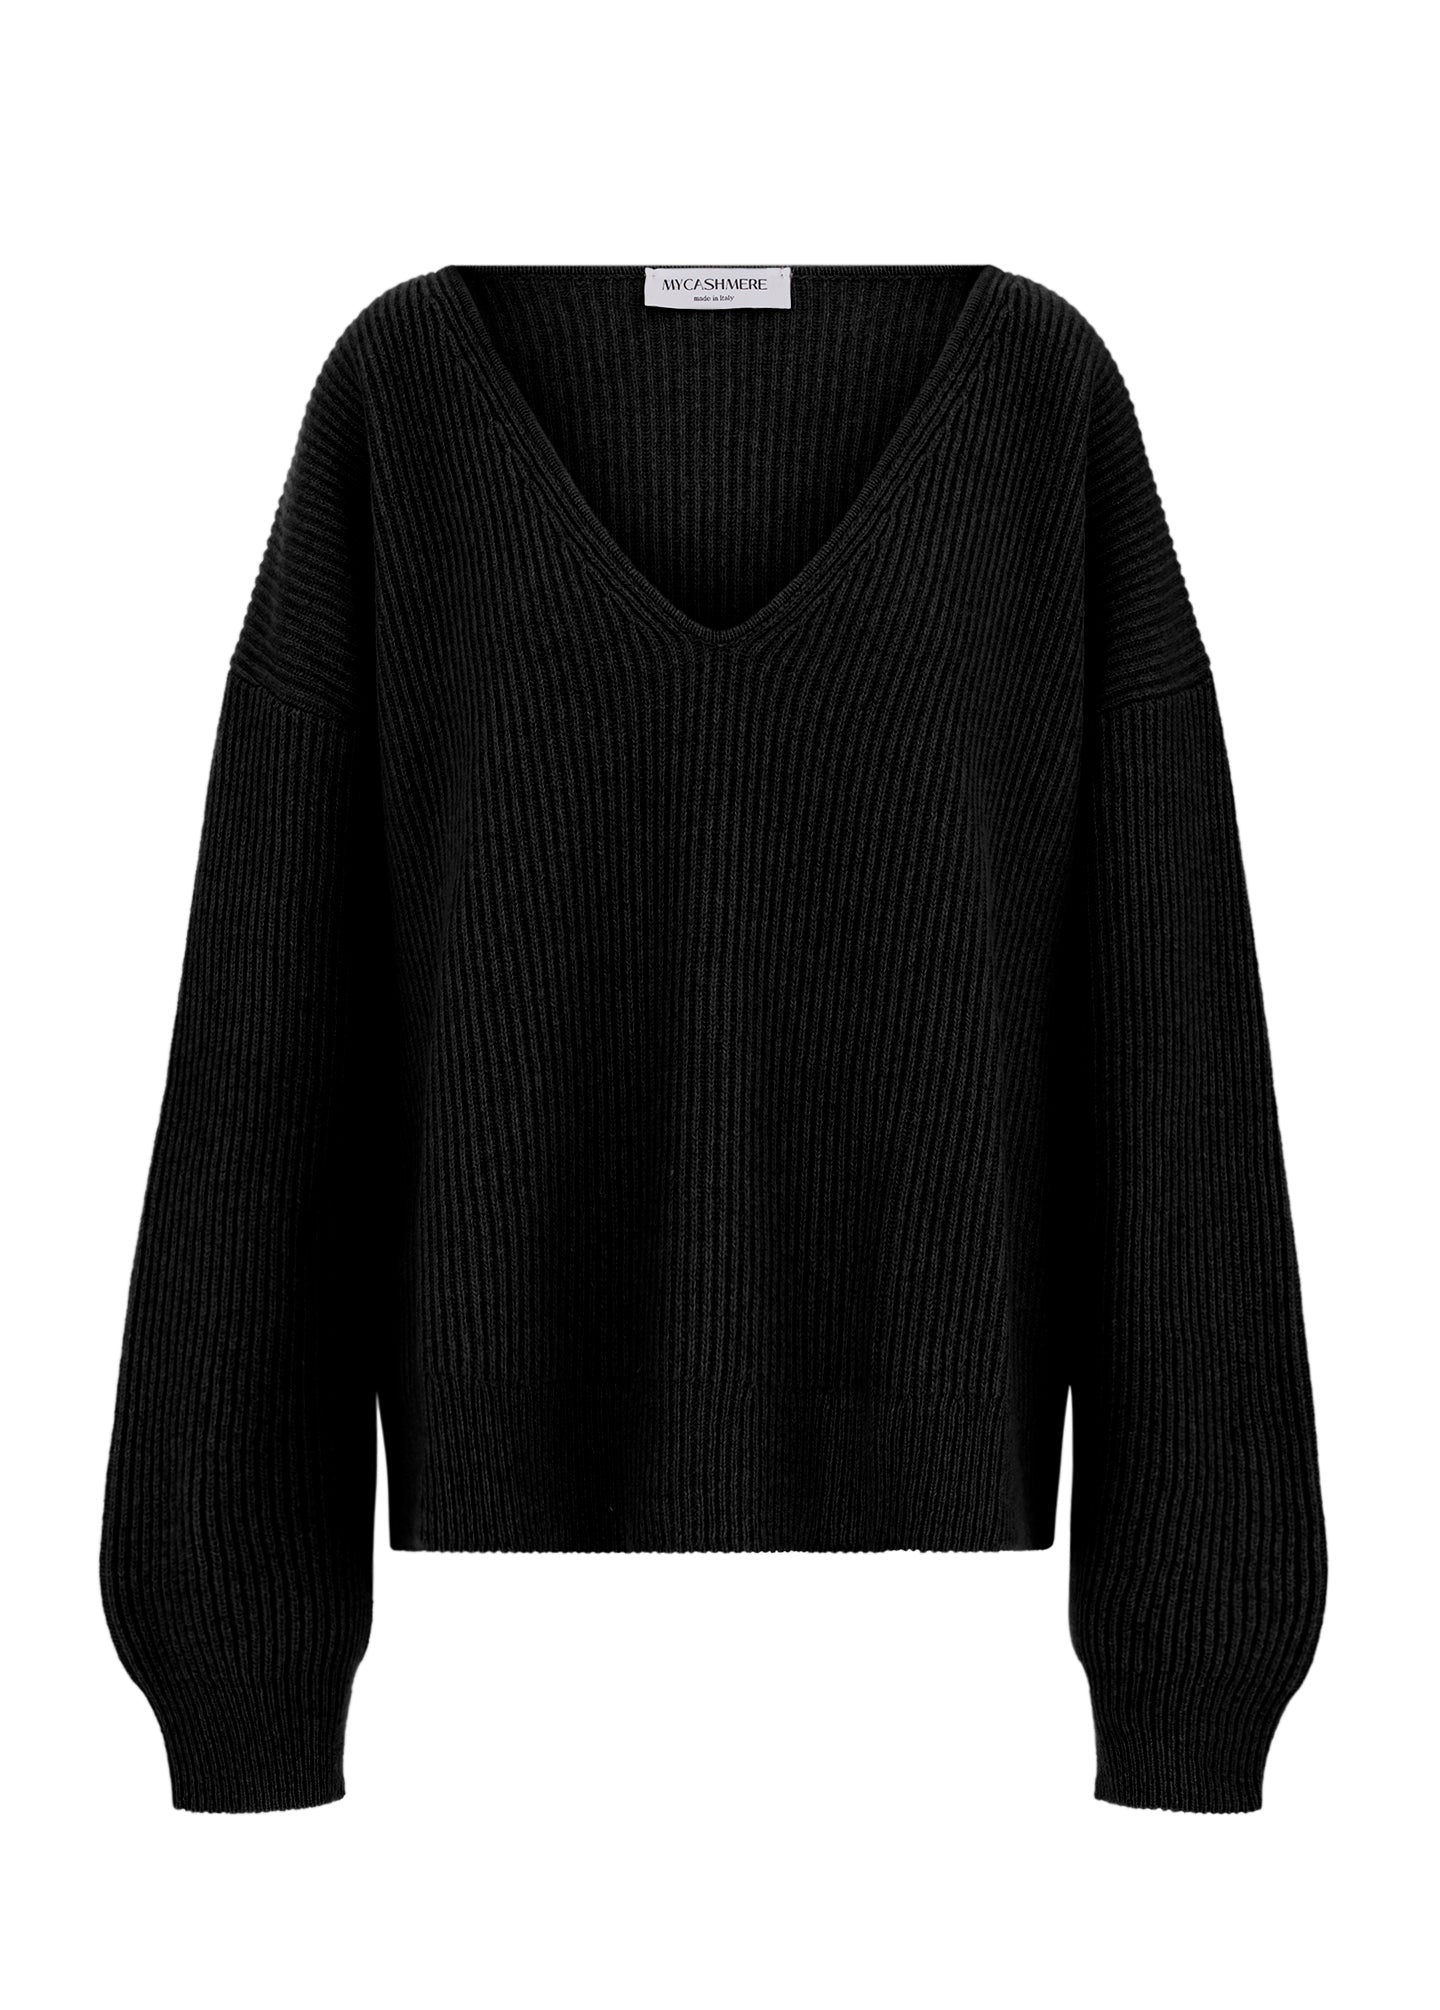 Women's cashmere V neck oversized jumper sweater black